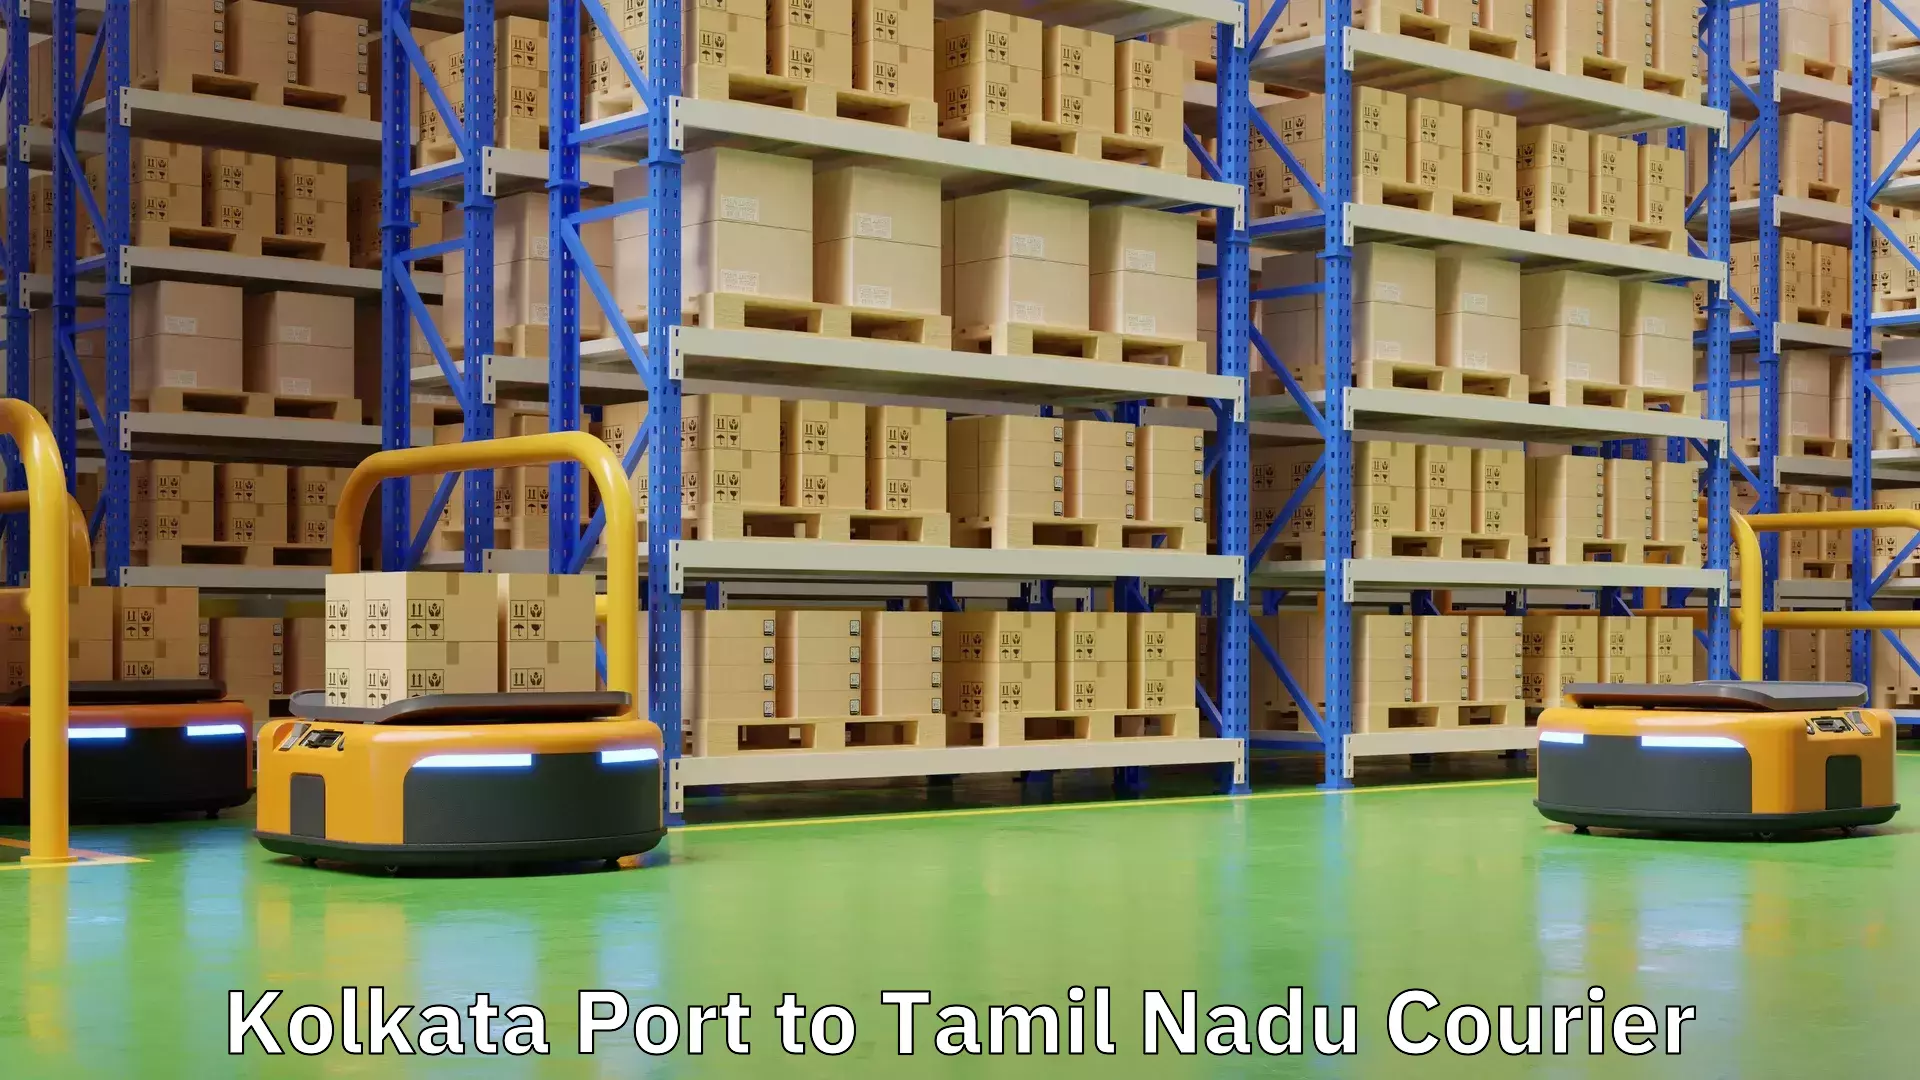 Premium delivery services Kolkata Port to Tamil Nadu